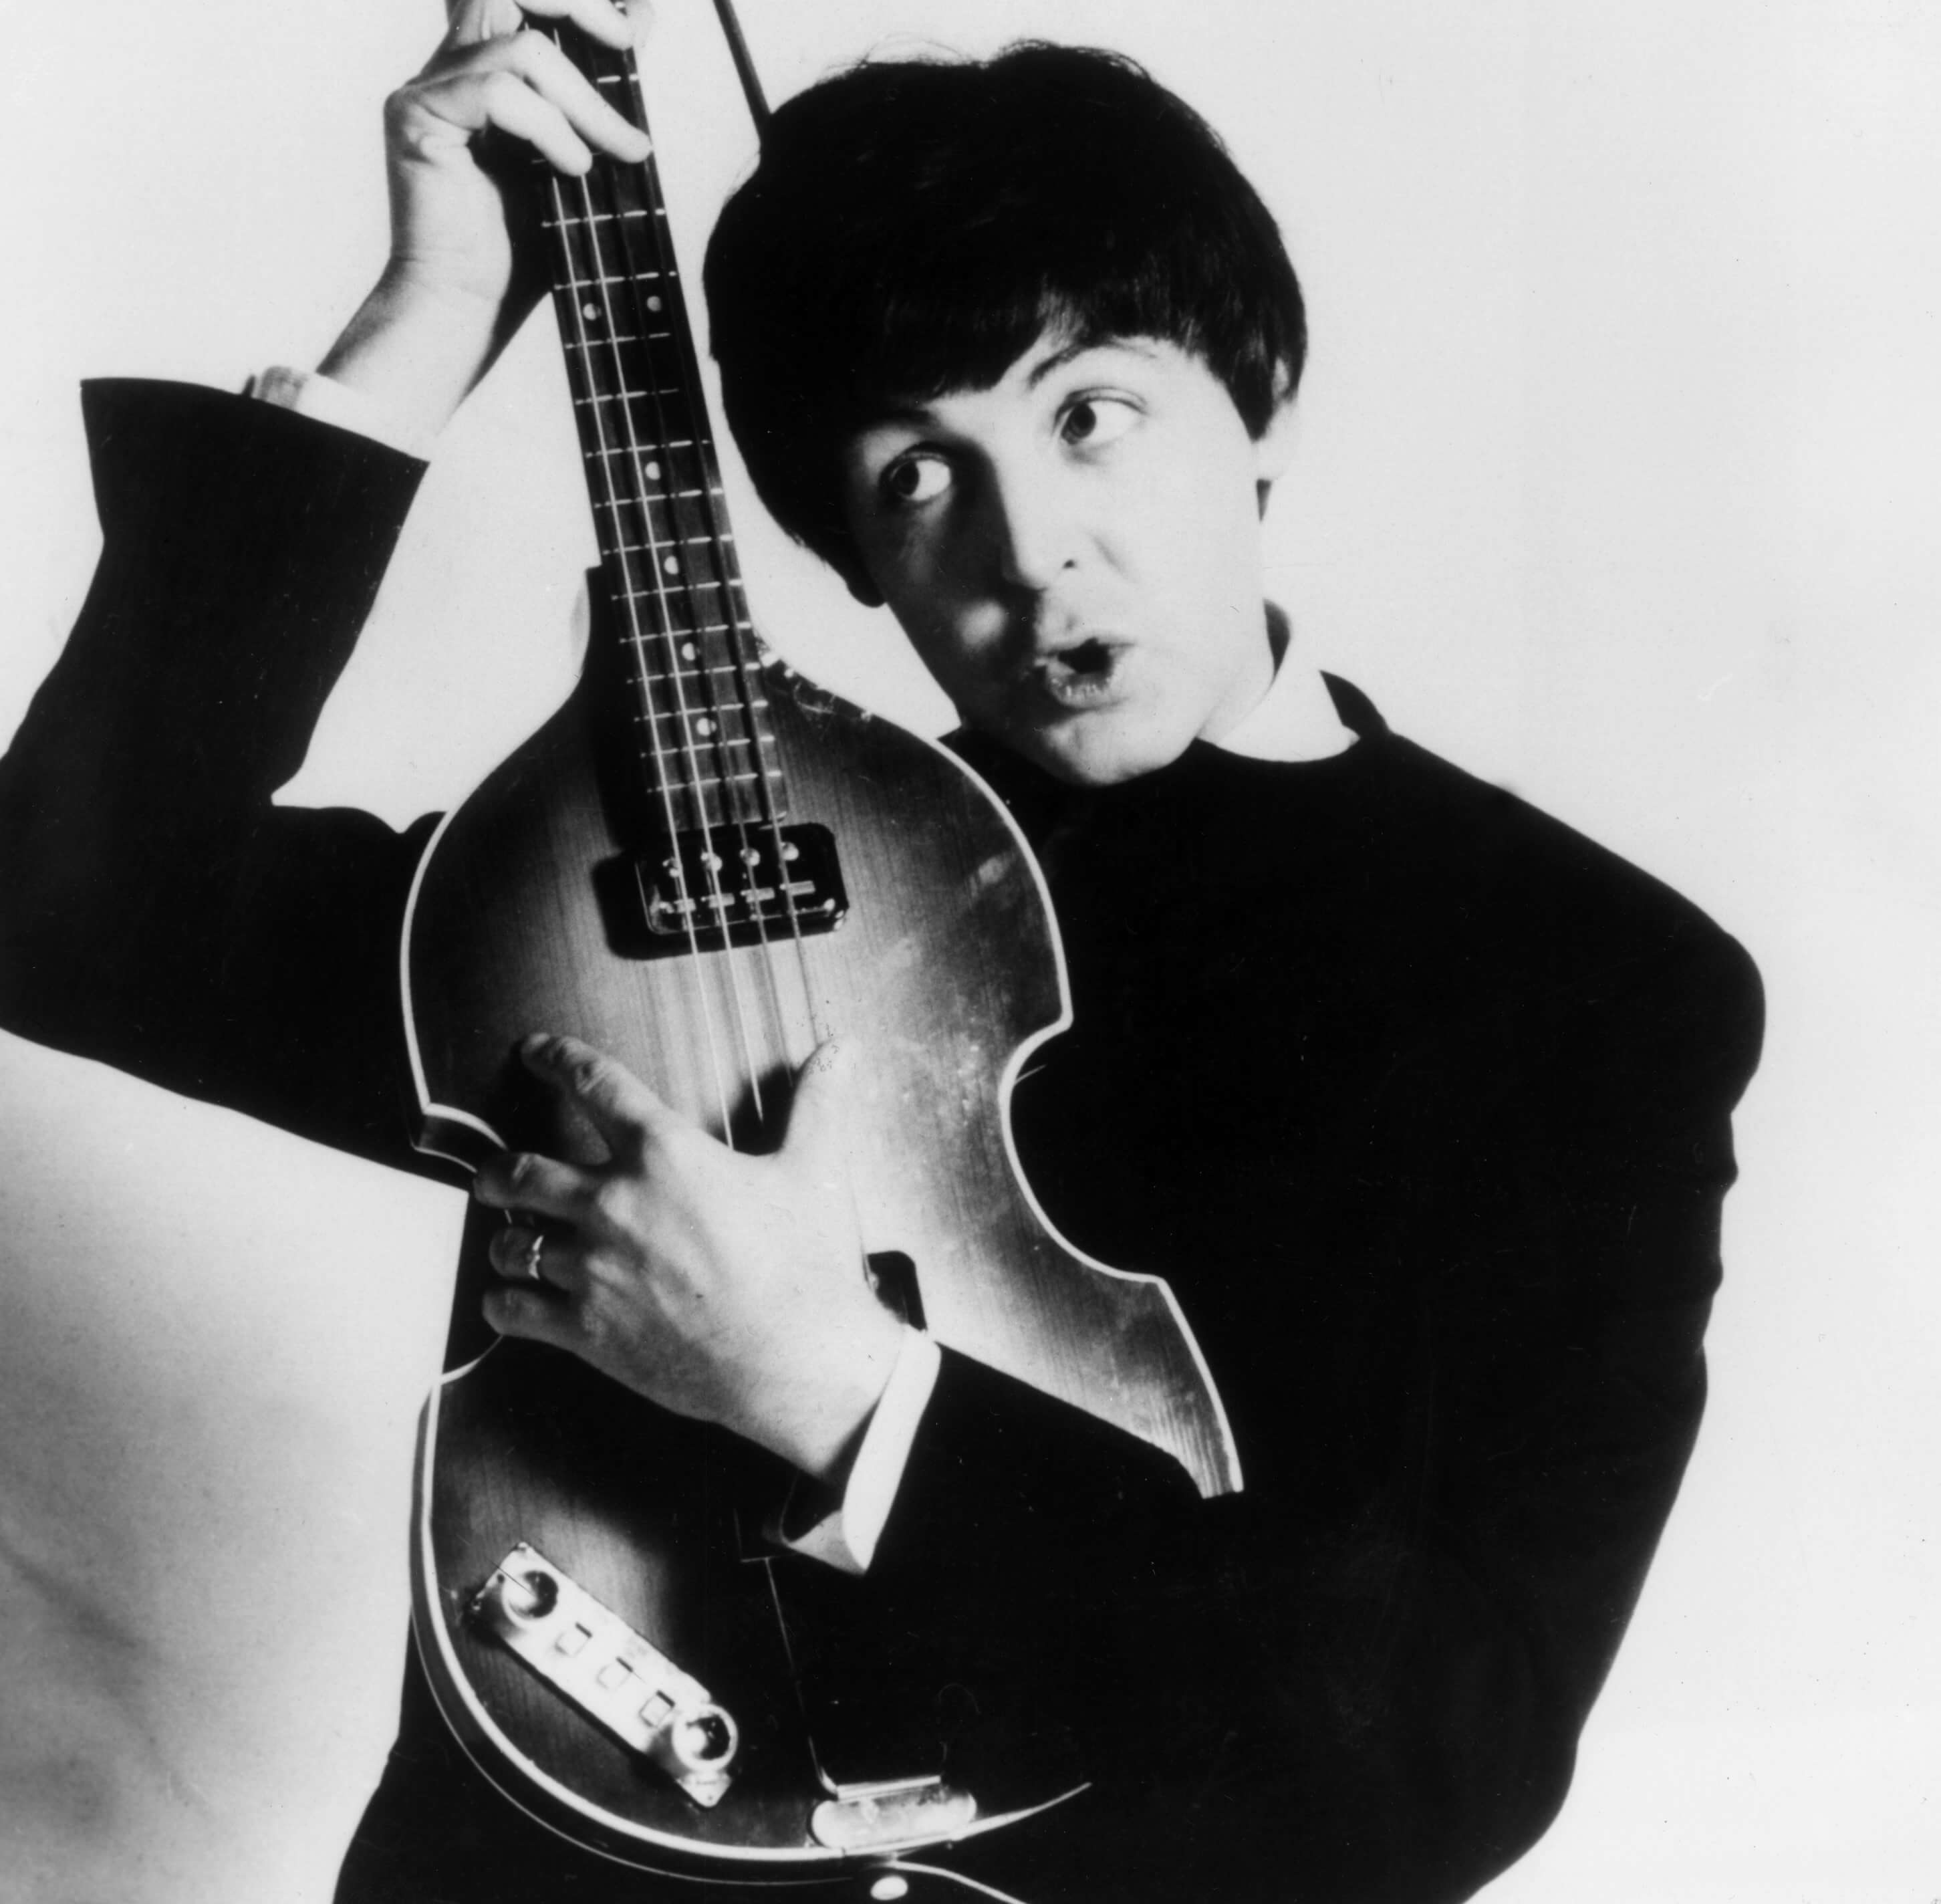 "My Love" singer Paul McCartney with a guitar